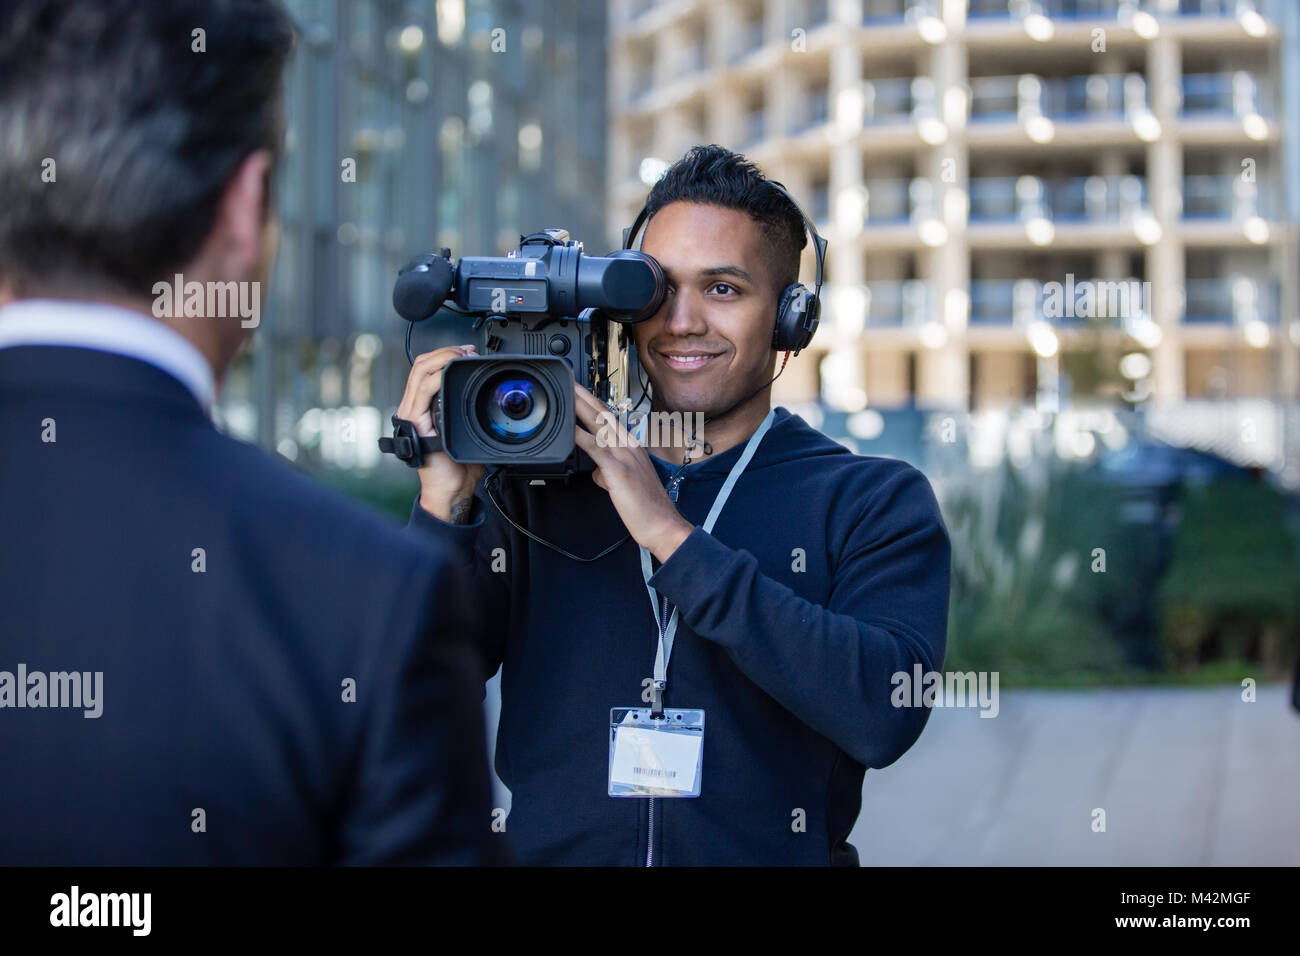 Cameraman filming for media broadcasting Stock Photo